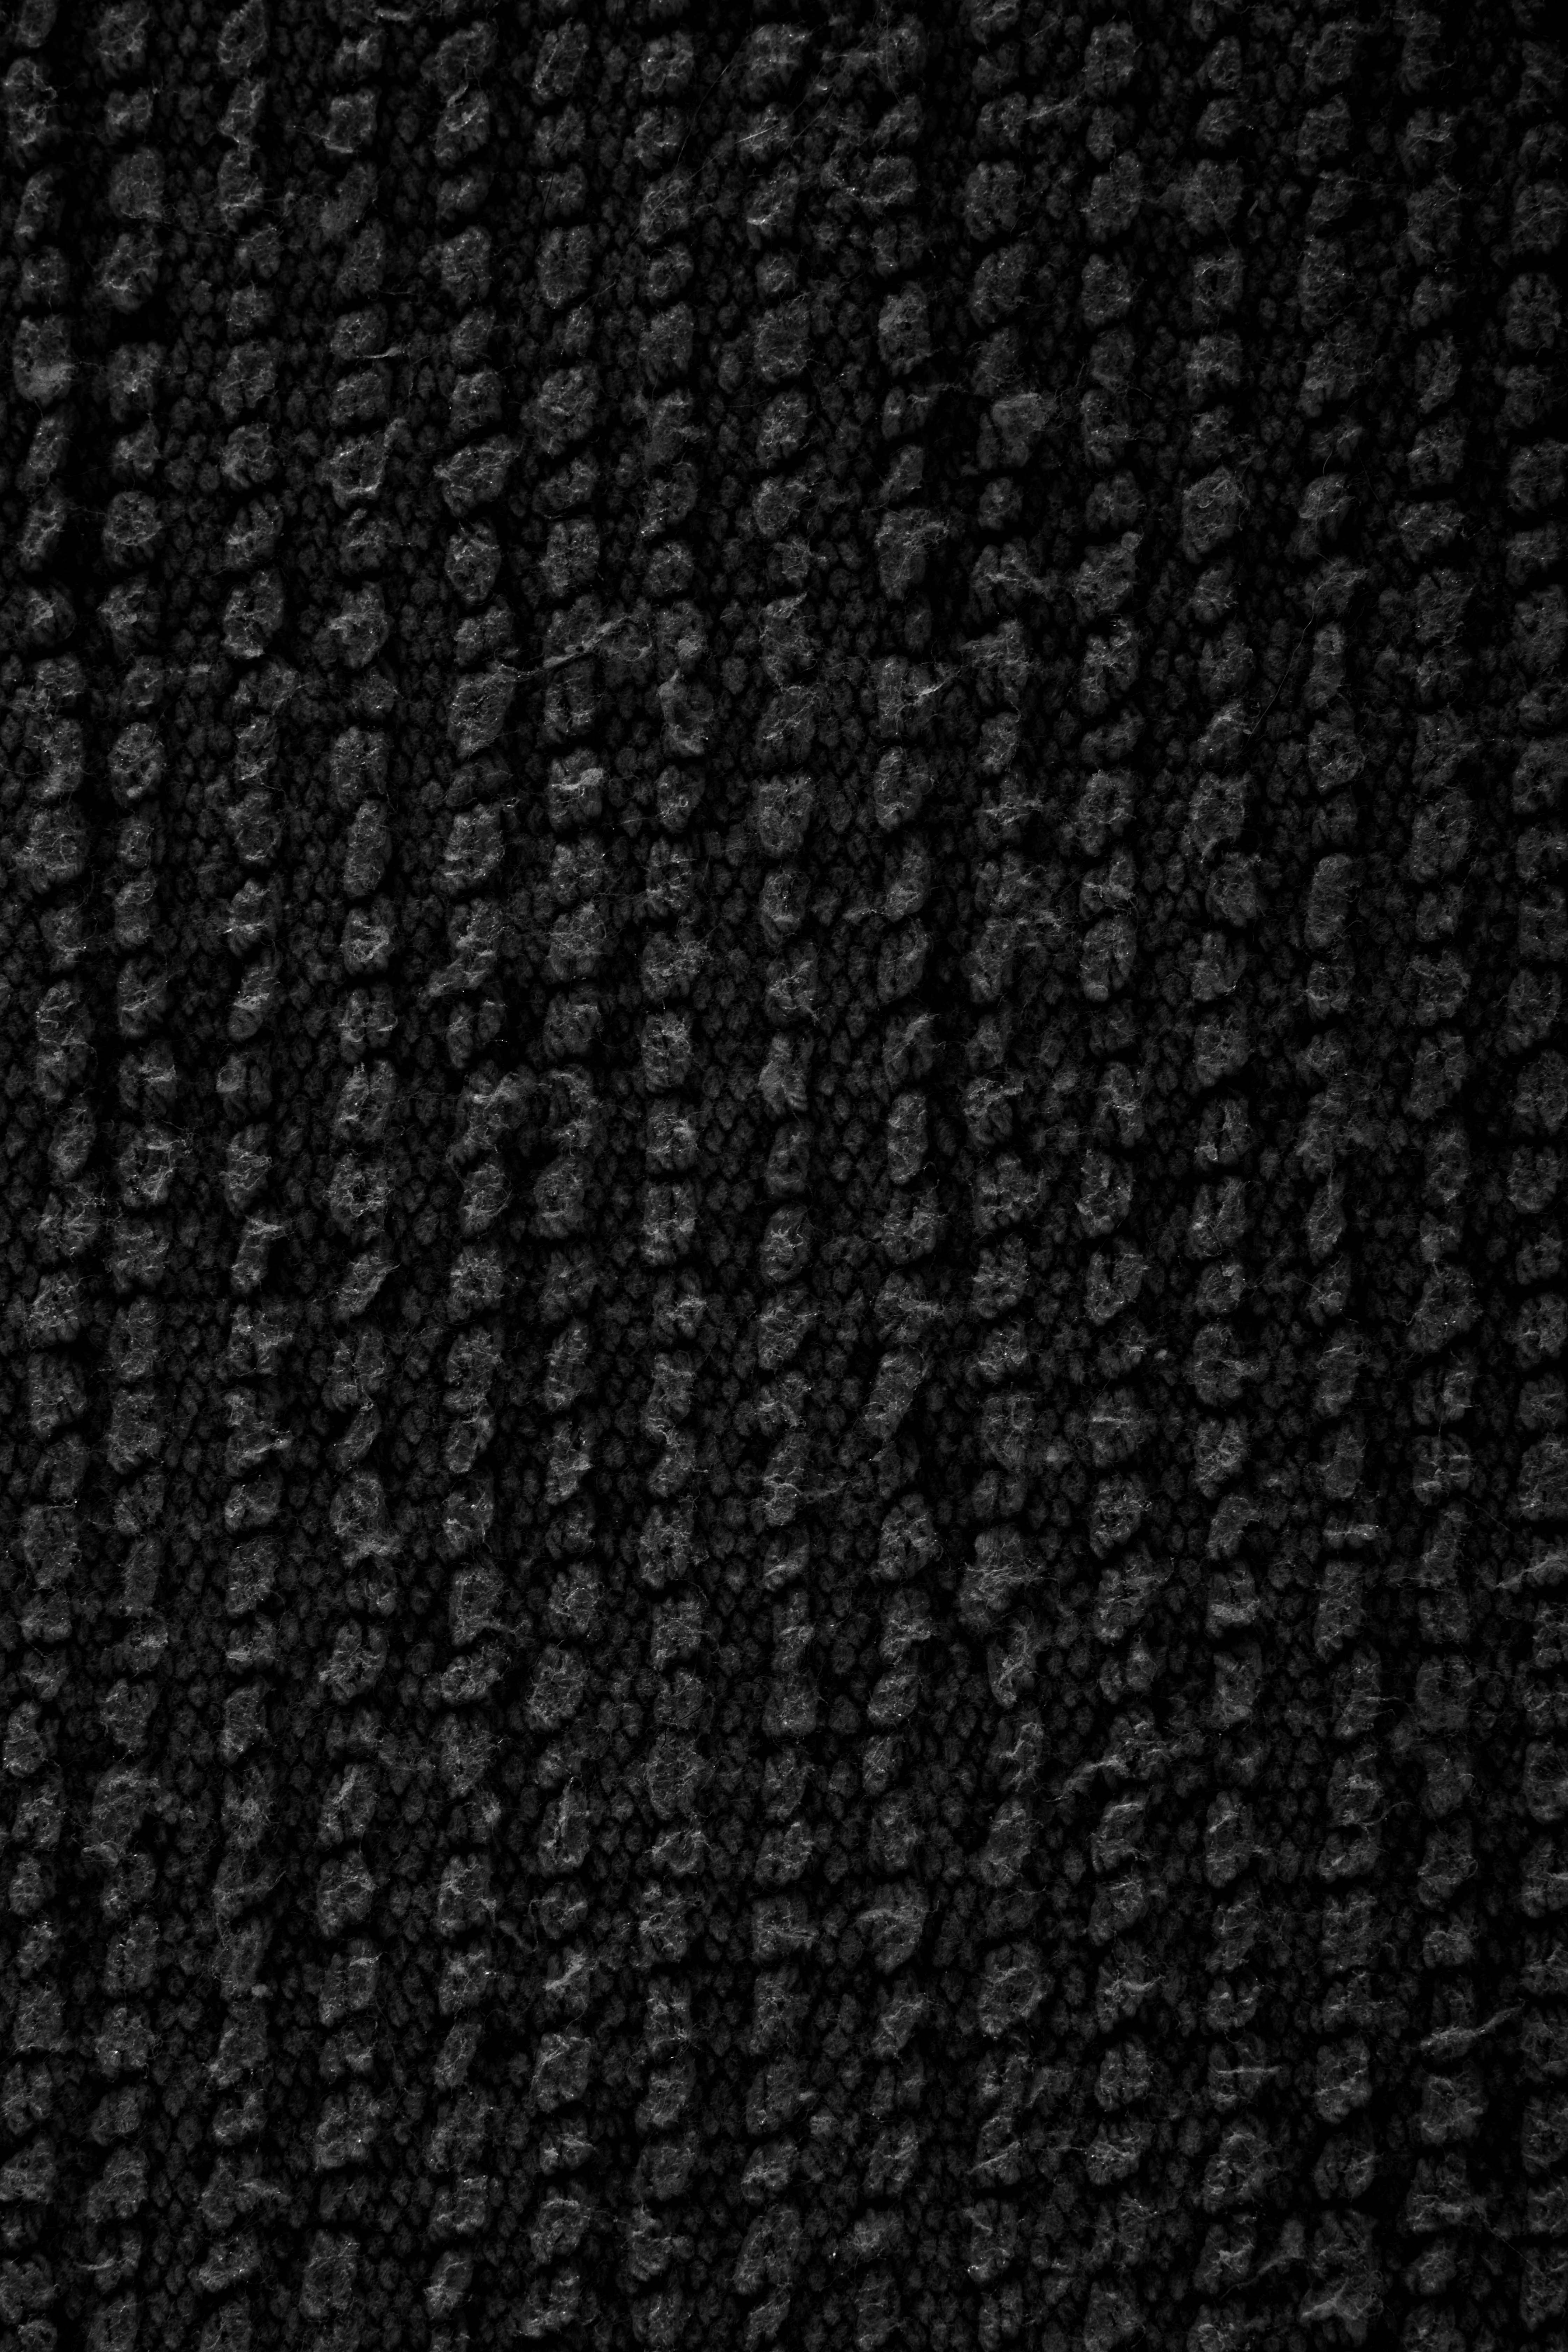 RIVA bath carpet - cotton anti-slip, 60x60cm, black